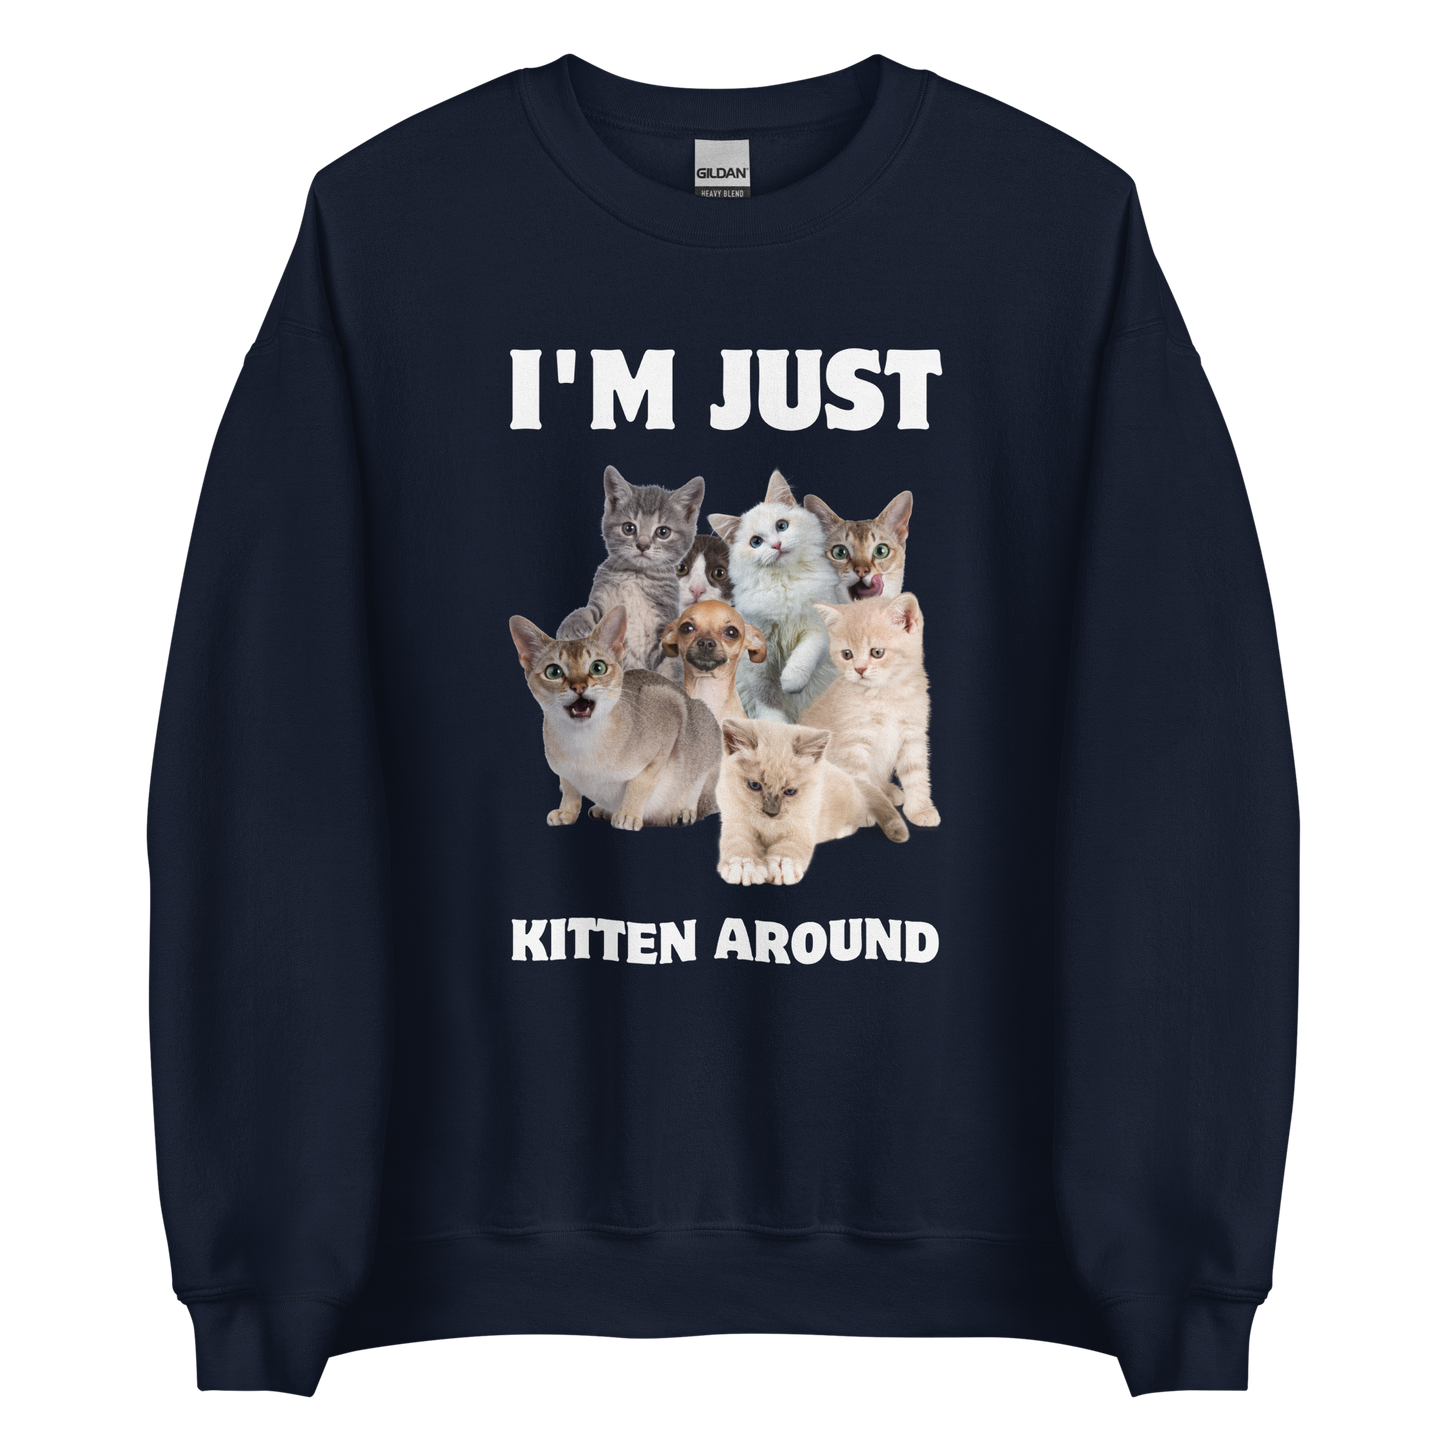 Navy Cat Sweatshirt featuring an I'm Just Kitten Around graphic on the chest - Funny Graphic Cat Sweatshirts - Boozy Fox